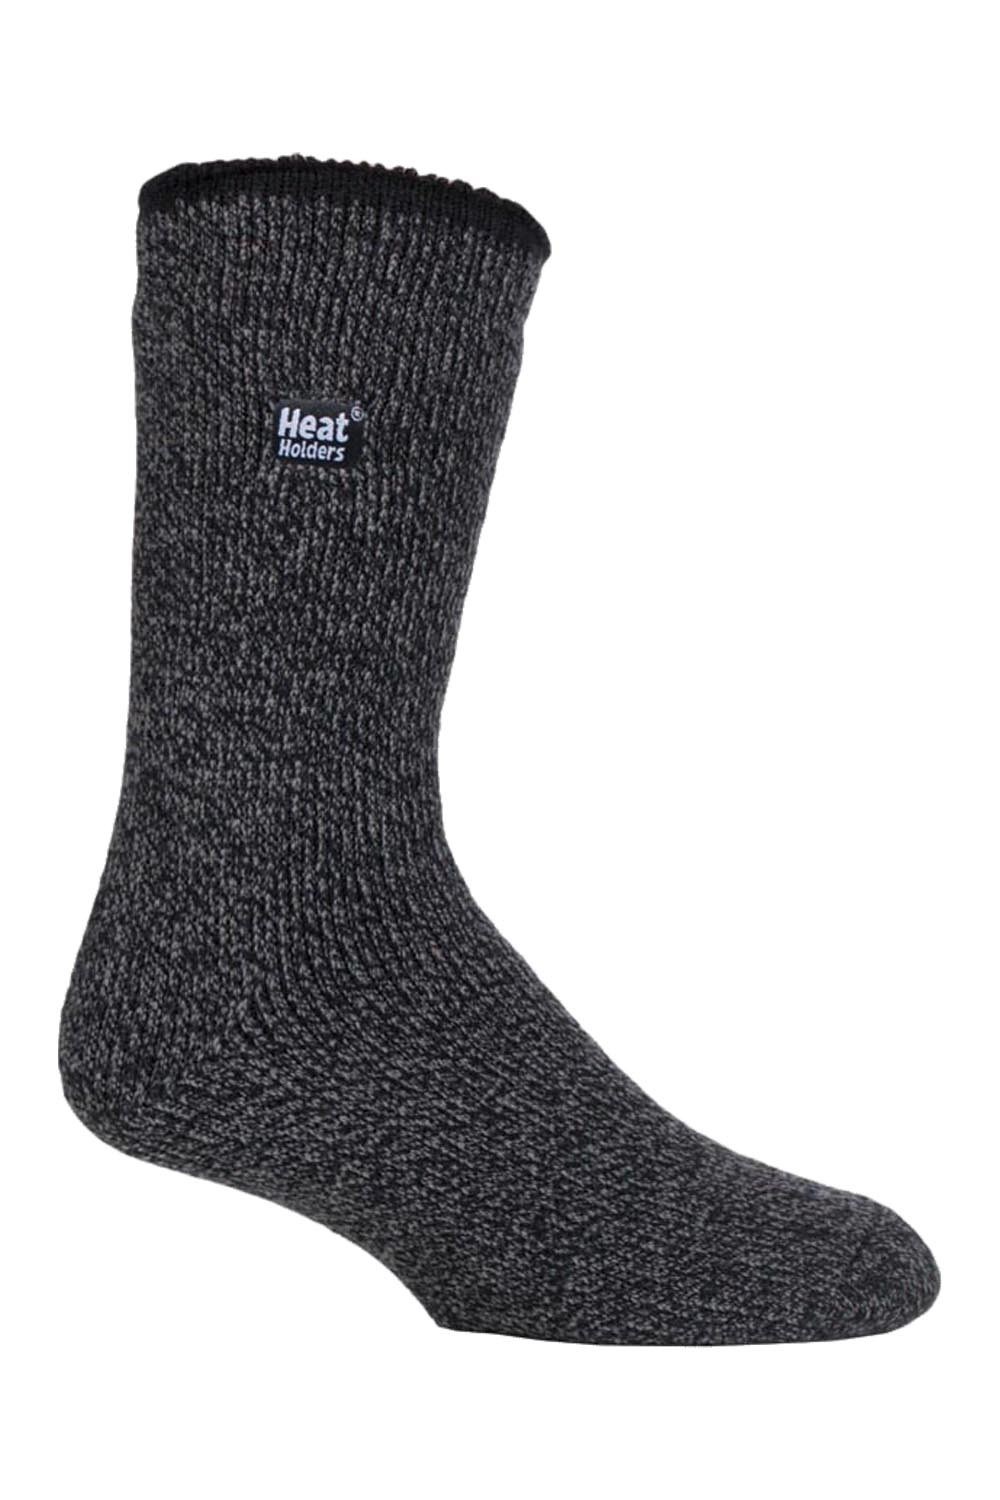 Mens Thick Merino Wool Thermal Socks